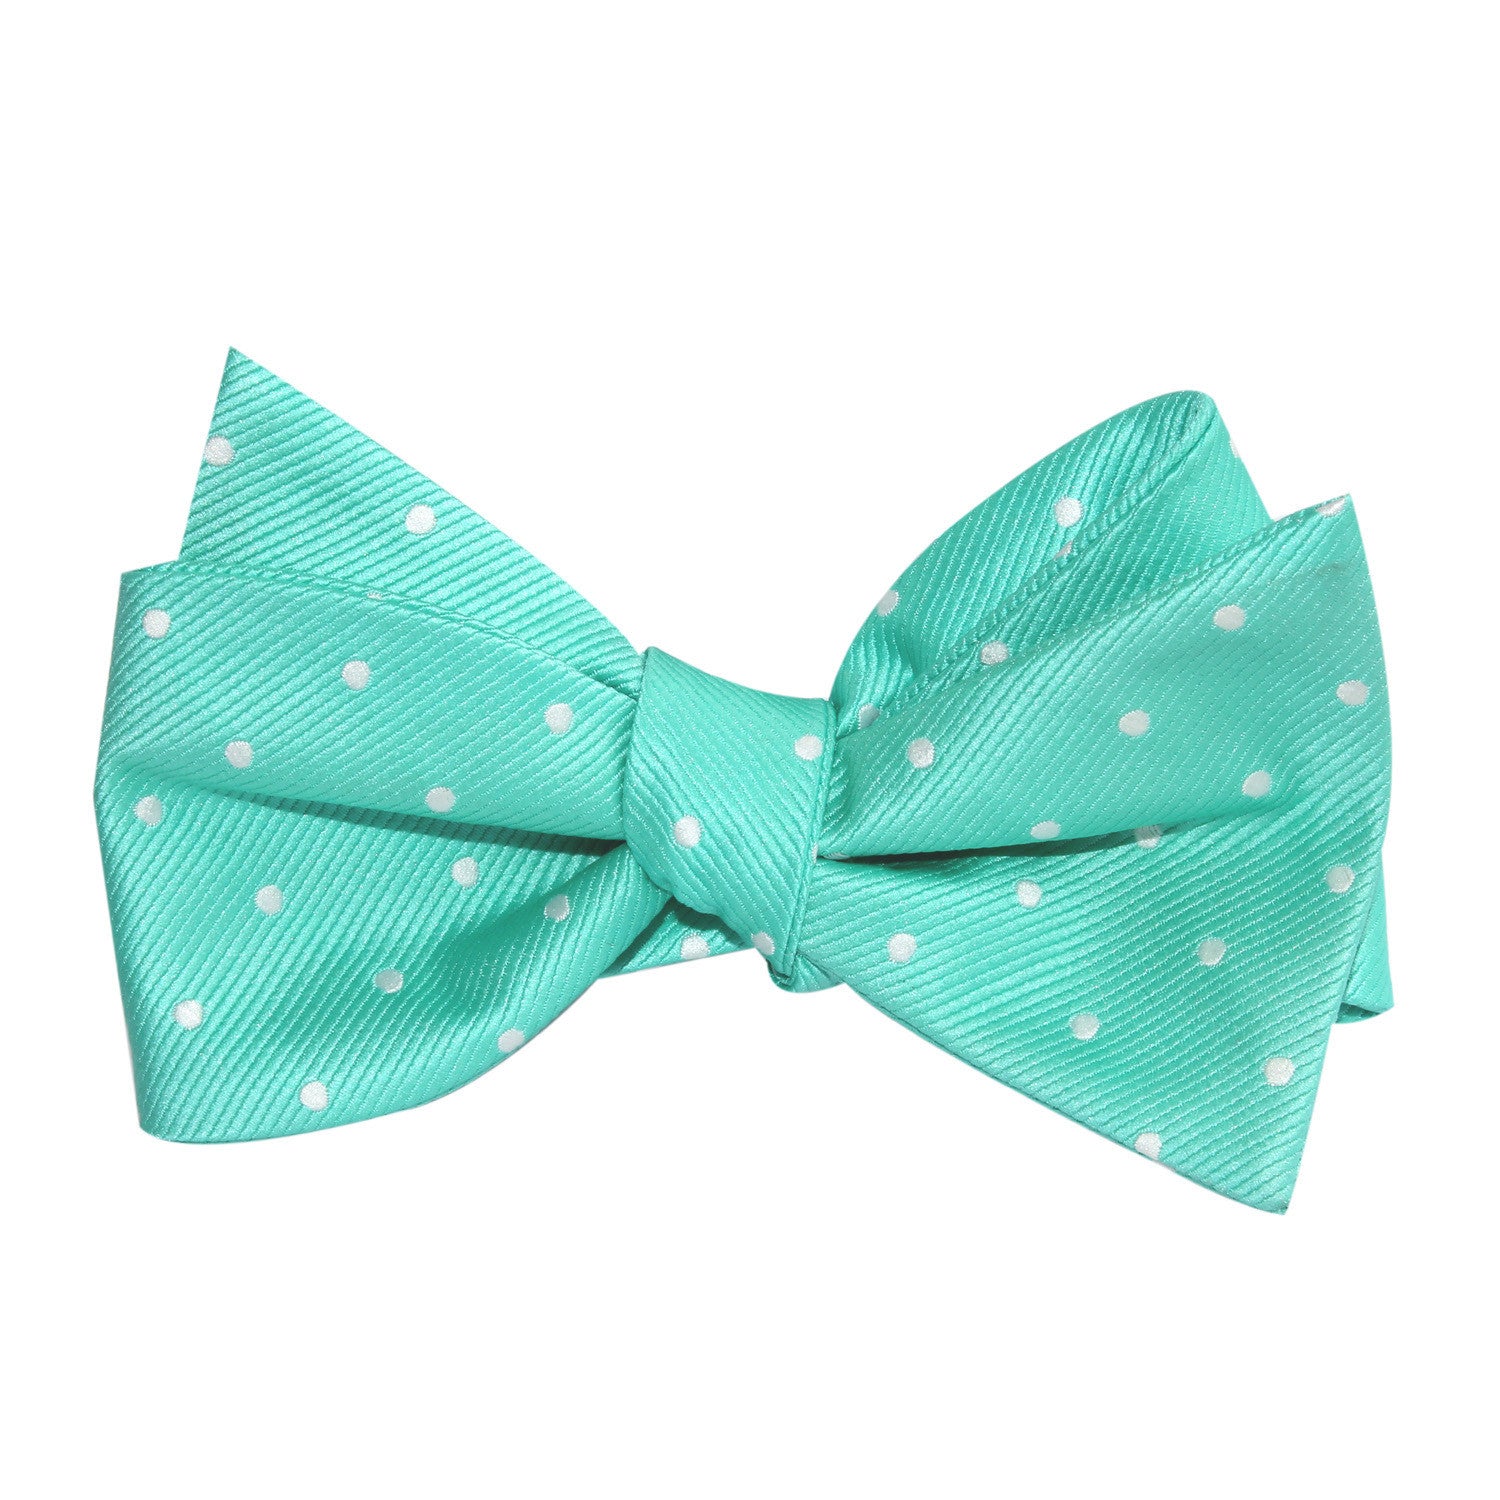 Seafoam Green with White Polka Dots Self Tie Bow Tie 1